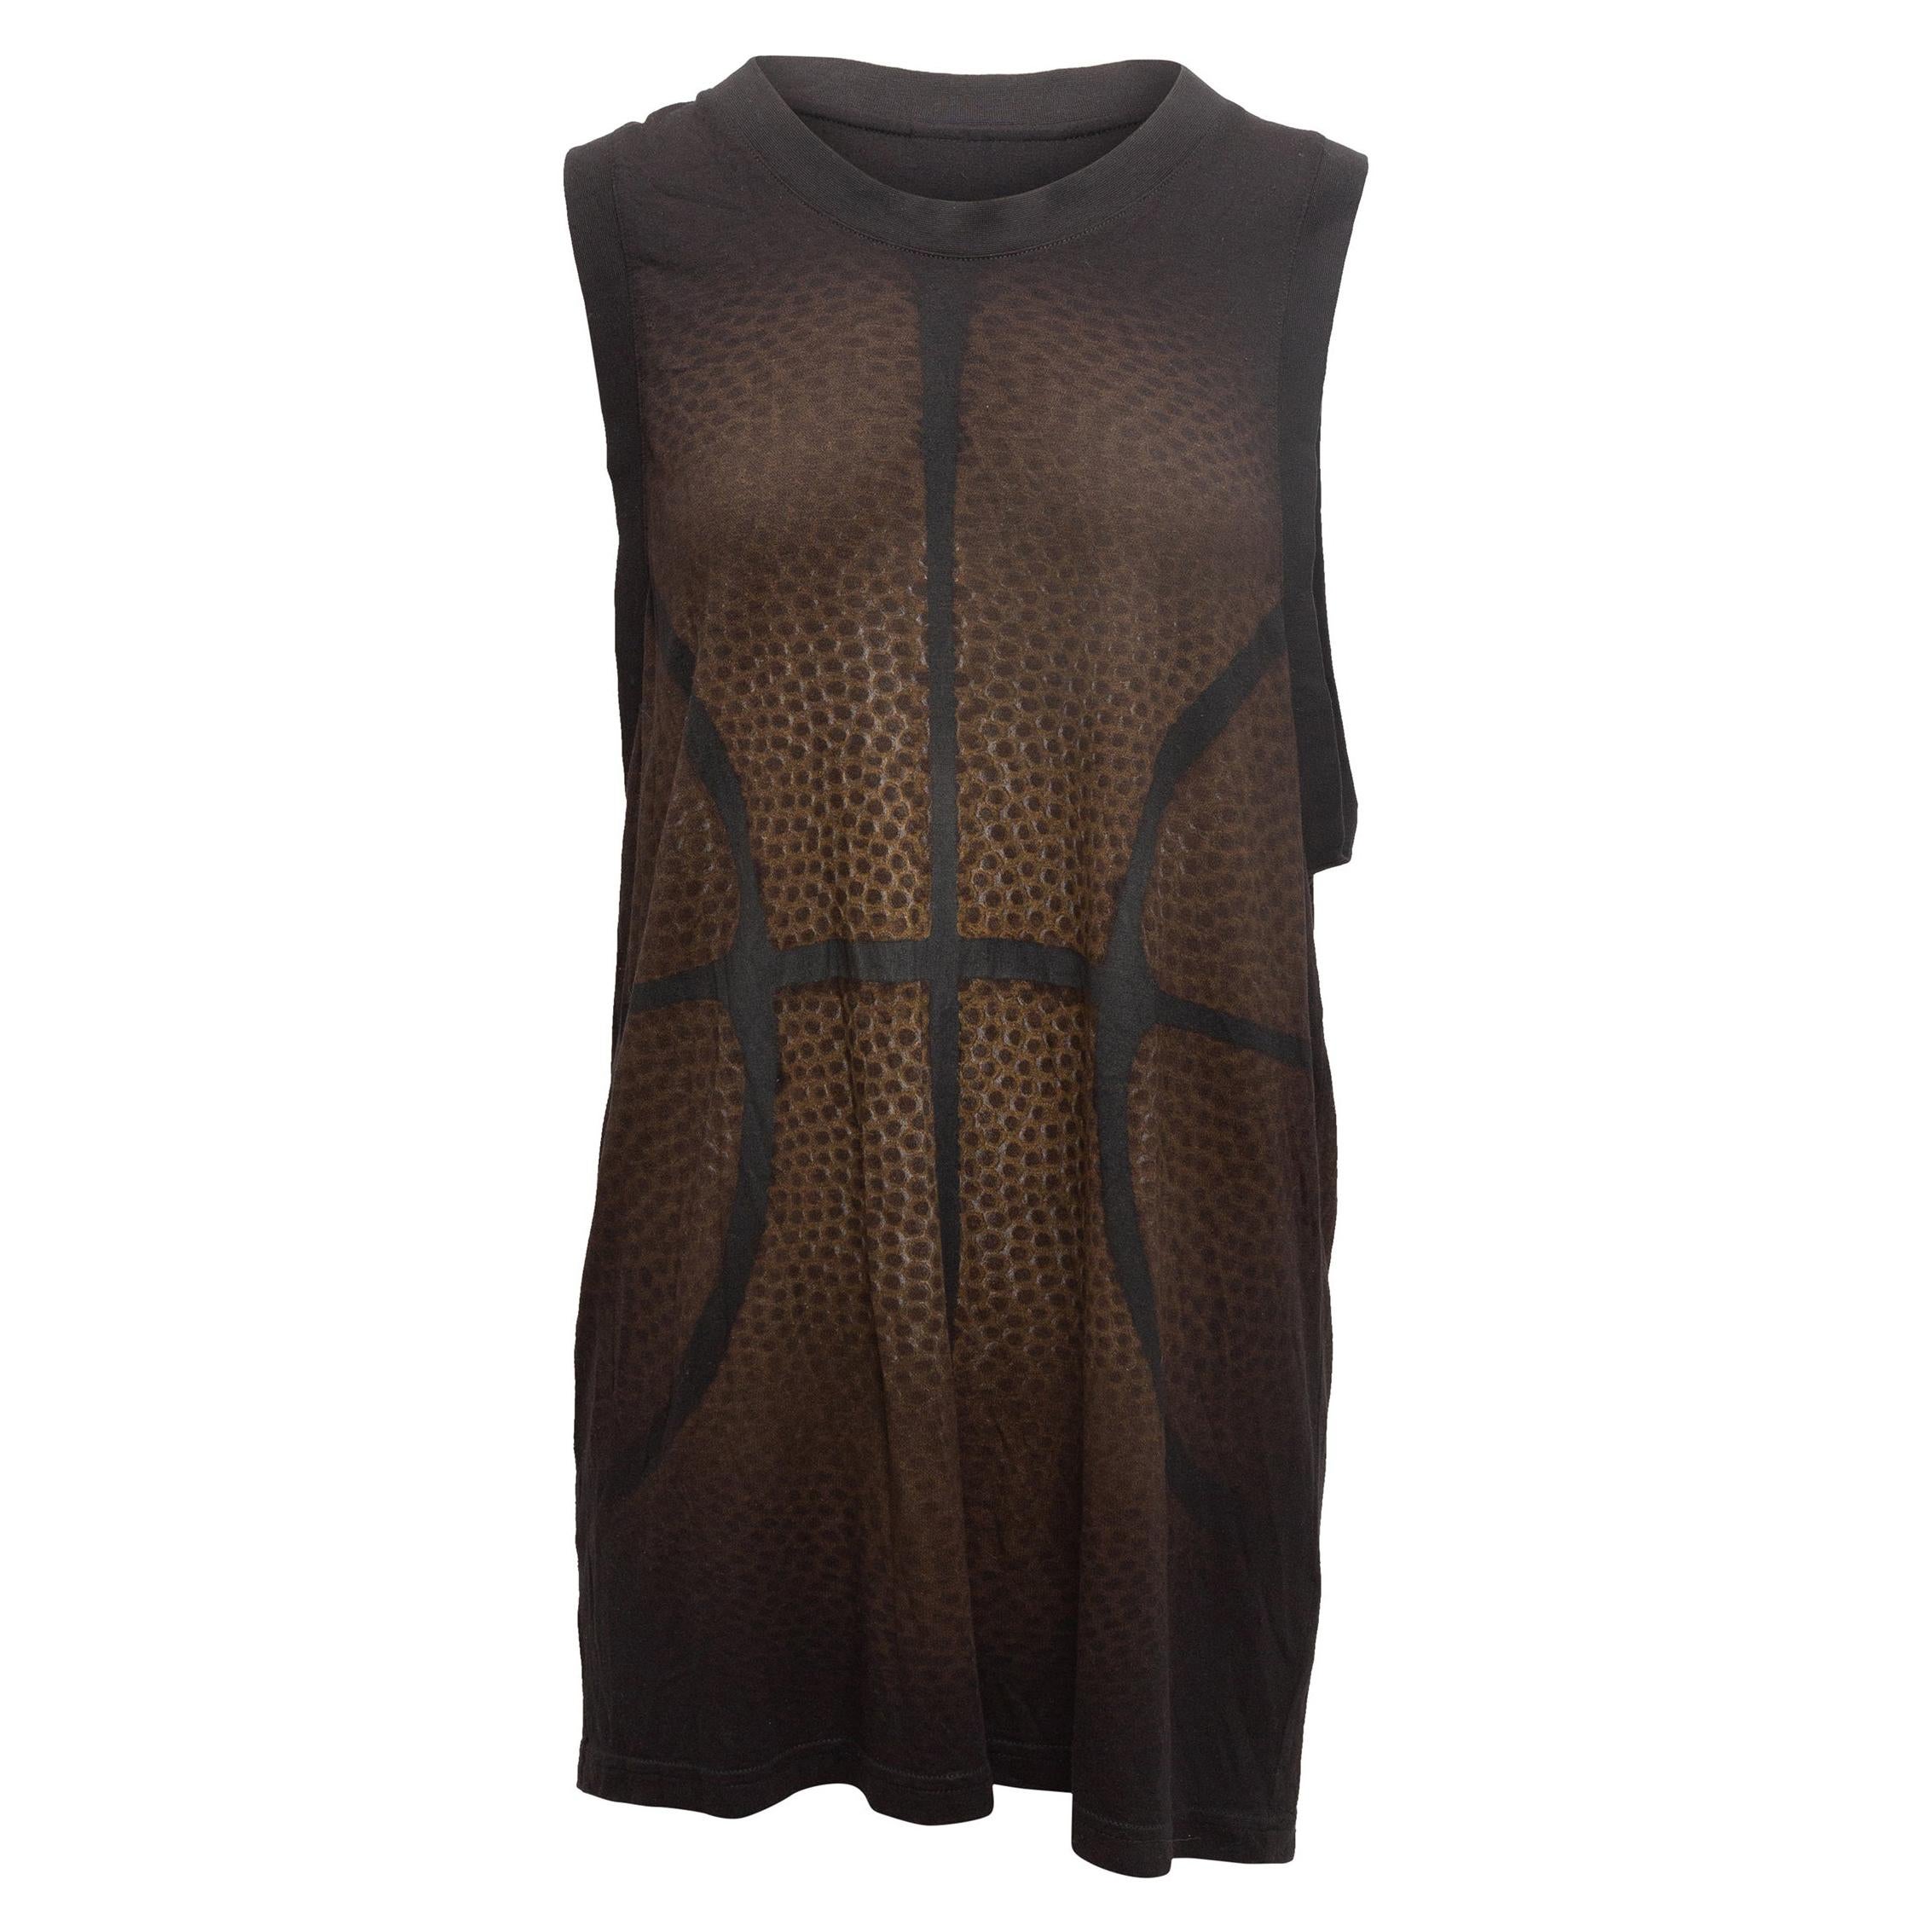  Givenchy Black & Brown Sleeveless Basketball Print Top